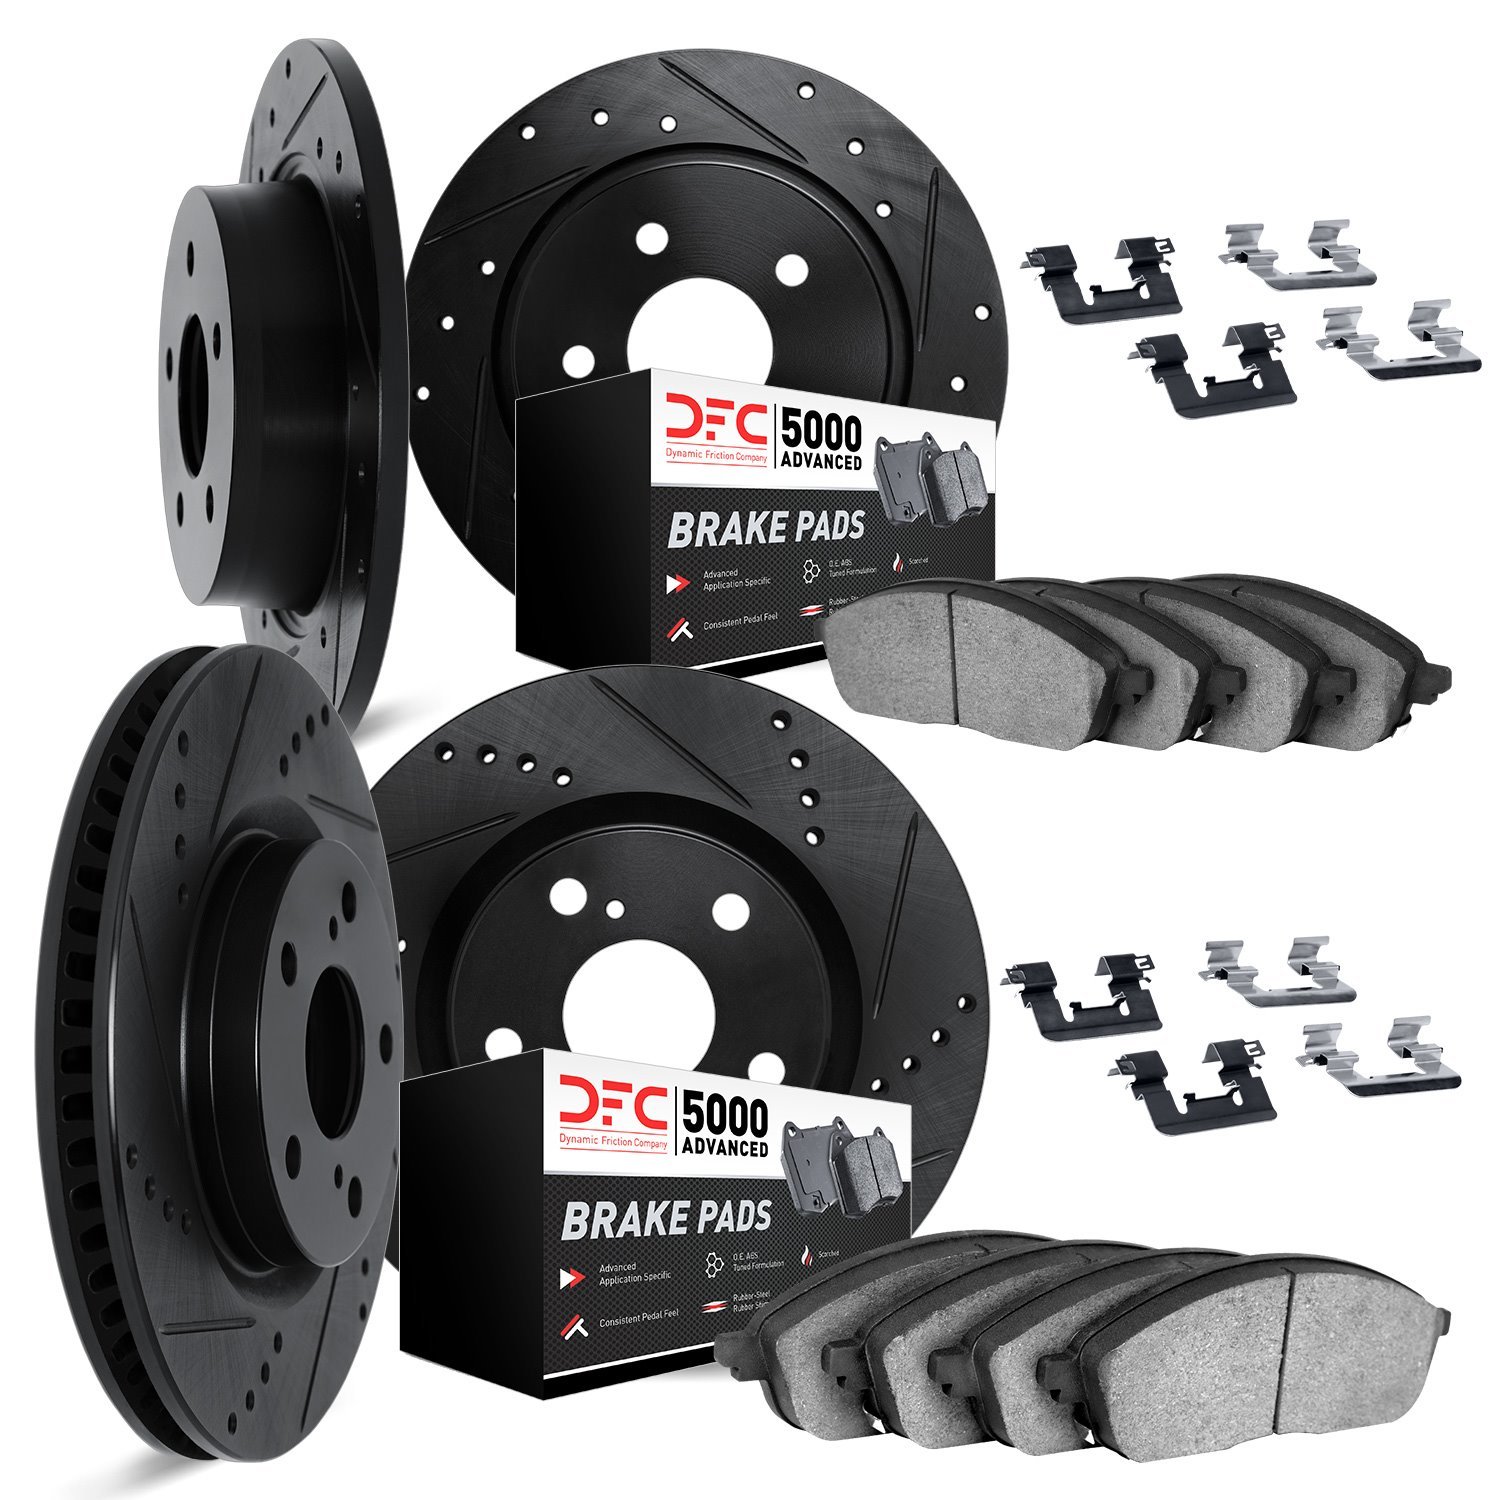 8514-40031 Drilled/Slotted Brake Rotors w/5000 Advanced Brake Pads Kit & Hardware [Black], Fits Select Mopar, Position: Front an